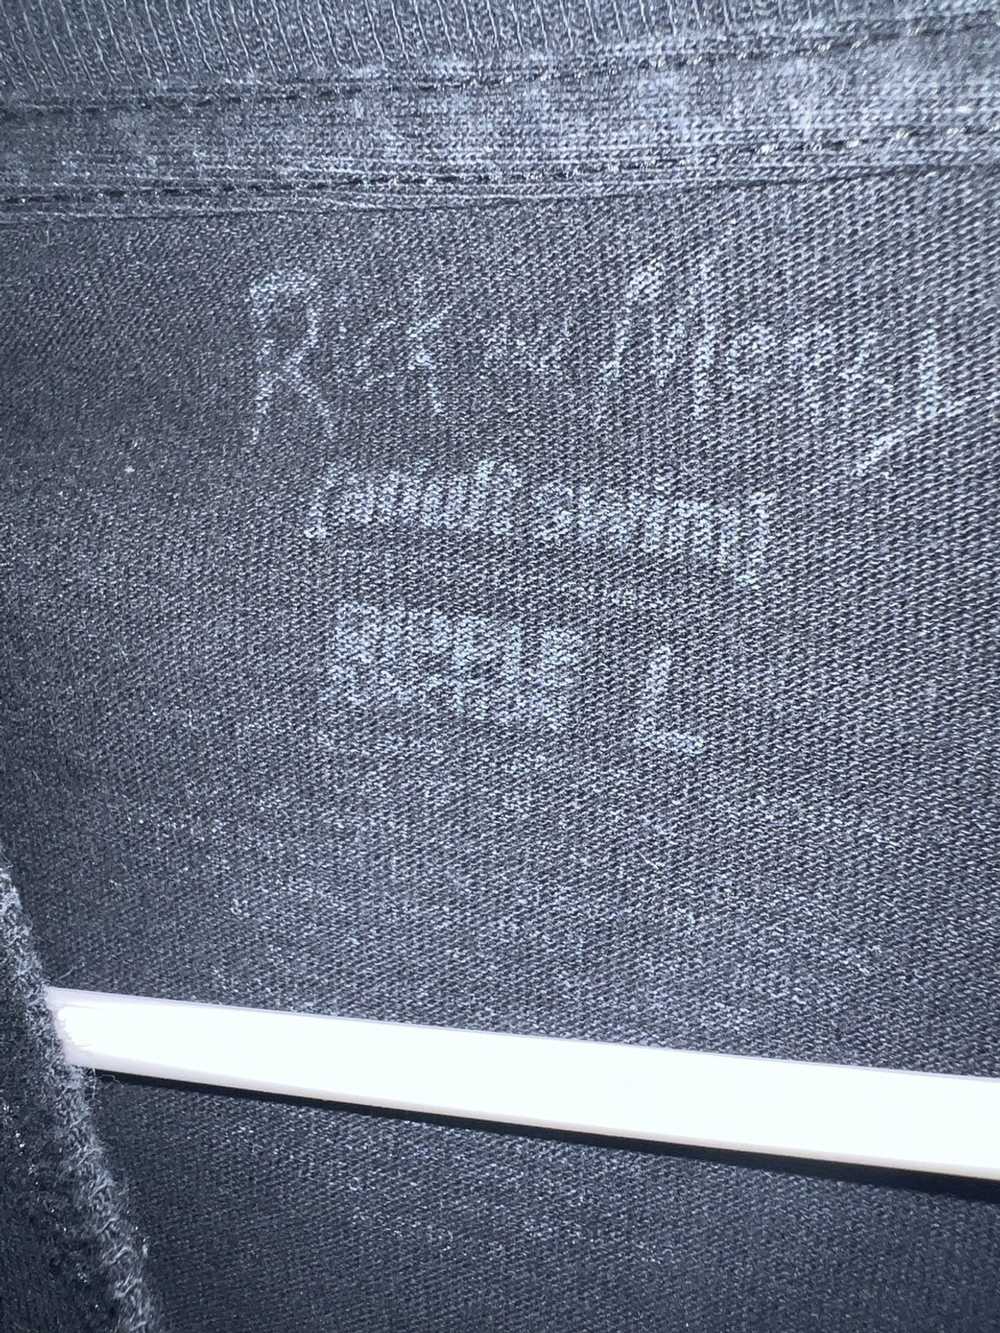 Pacsun Rick and Morty Long sleeve Shirt - image 3